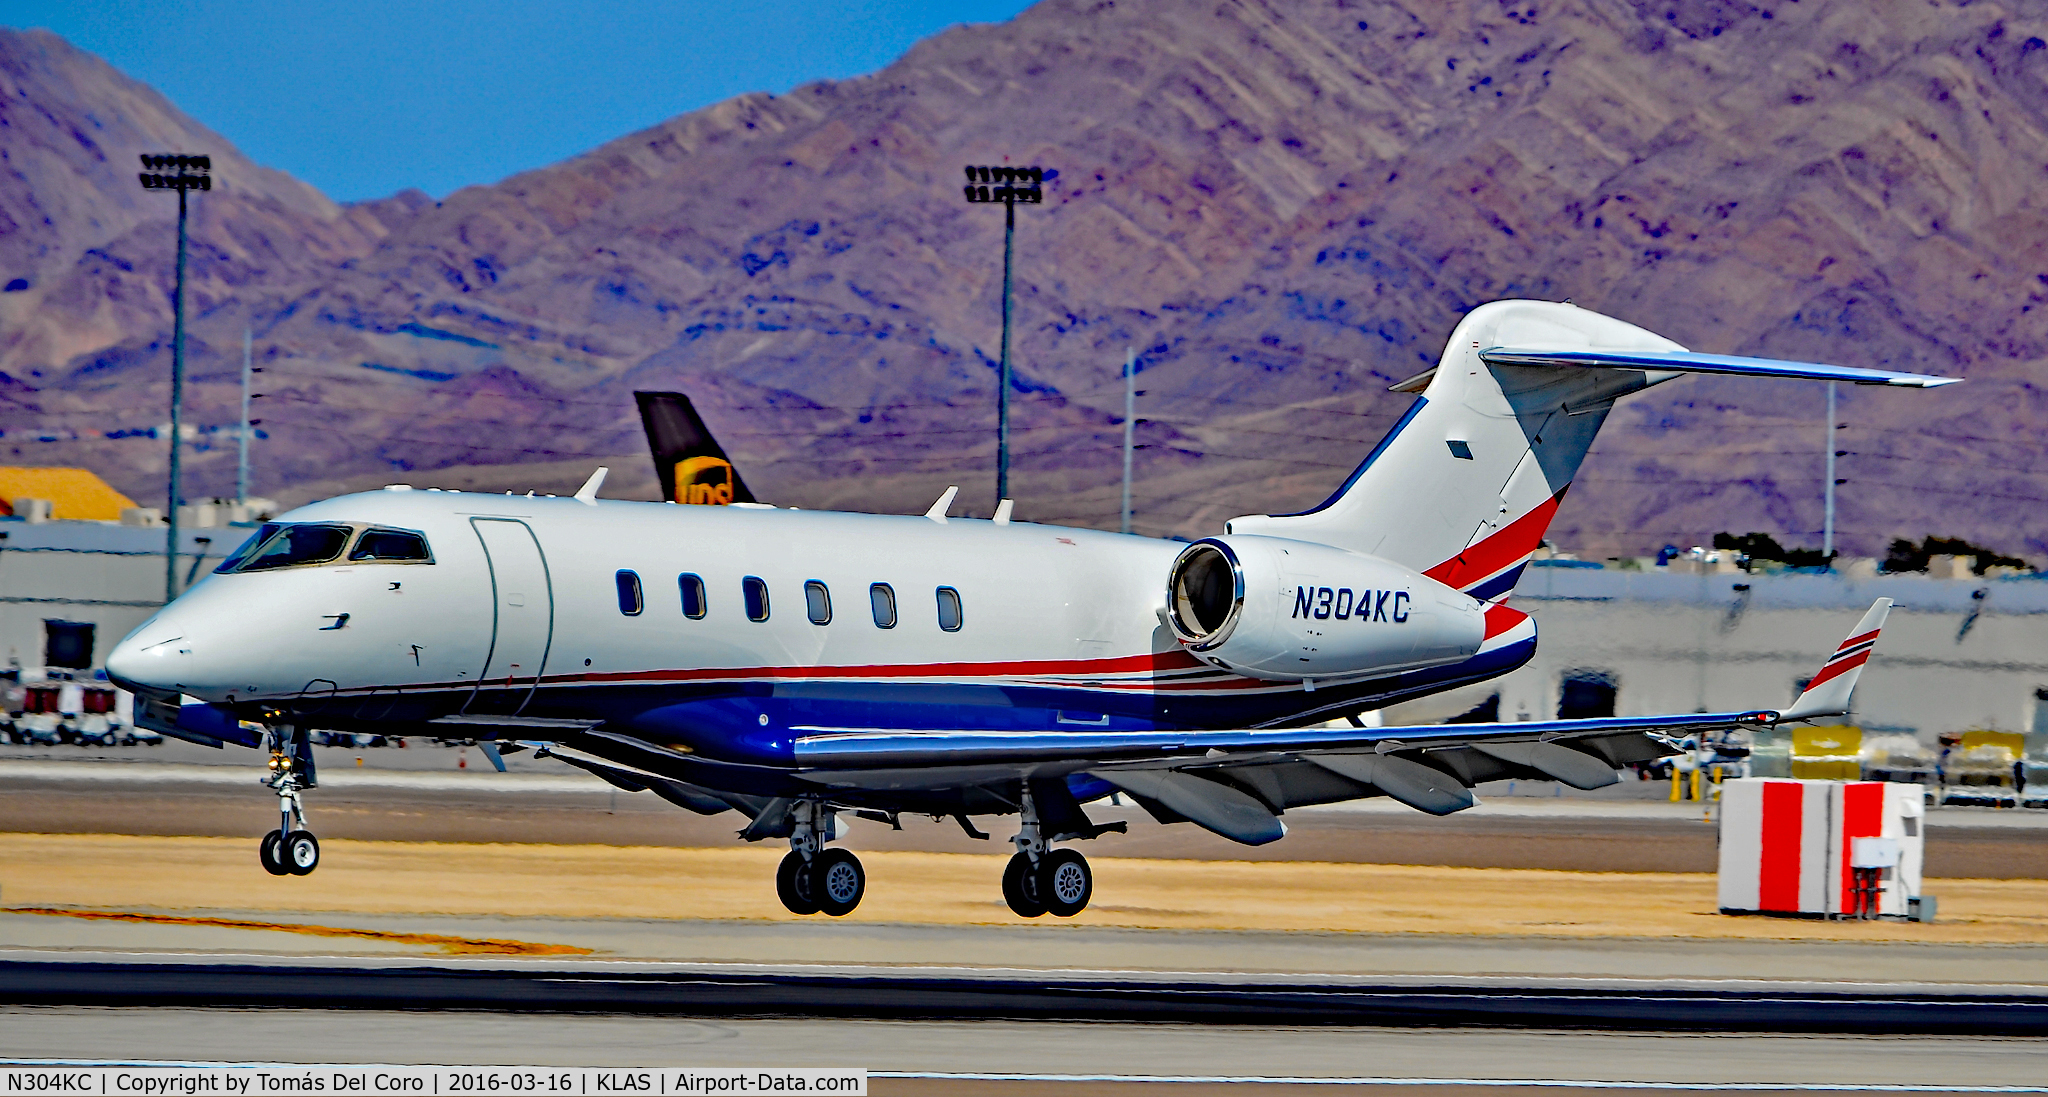 N304KC, 2013 Bombardier Challenger 300 (BD-100-1A10) C/N 20390, N304KC 2013 Bombadier  BD-100-1A10 s/n 20390 Challenger 300 - Las Vegas - McCarran International (LAS / KLAS)
USA - Nevada, March 16, 2016
Photo: Tomás Del Coro